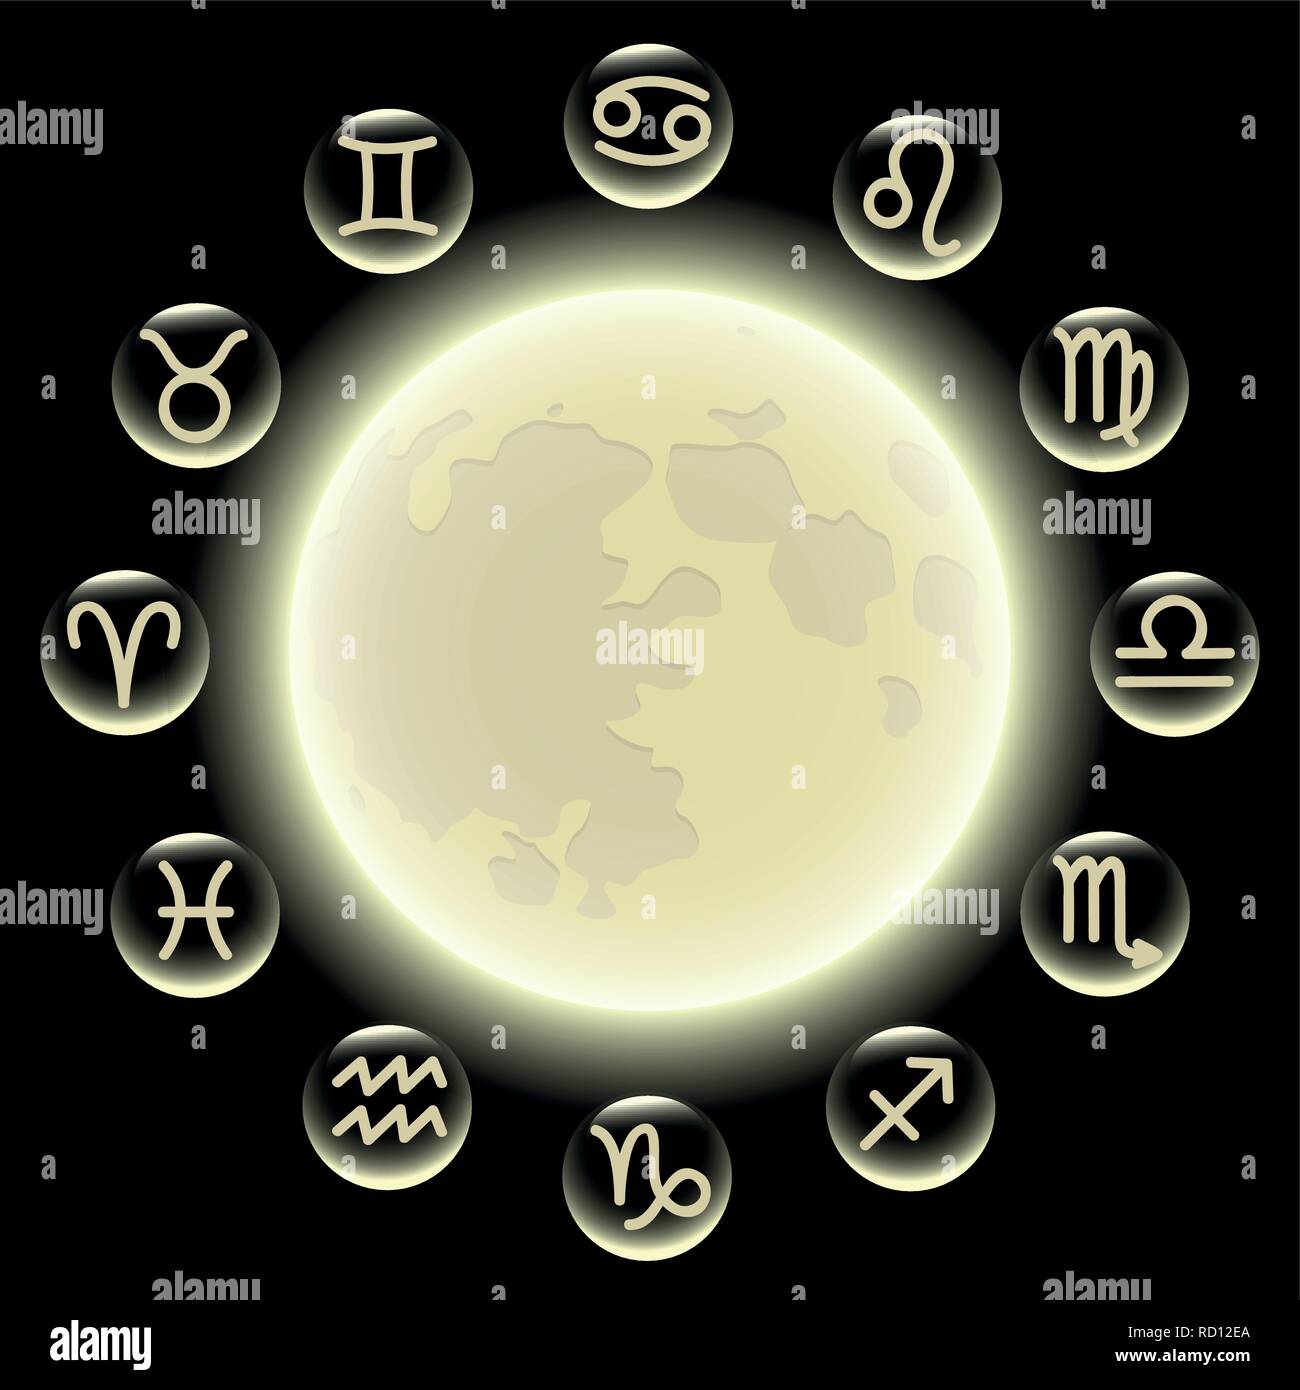 zodiac symbols in circle at full moon vector illustration EPS10 Stock Vector